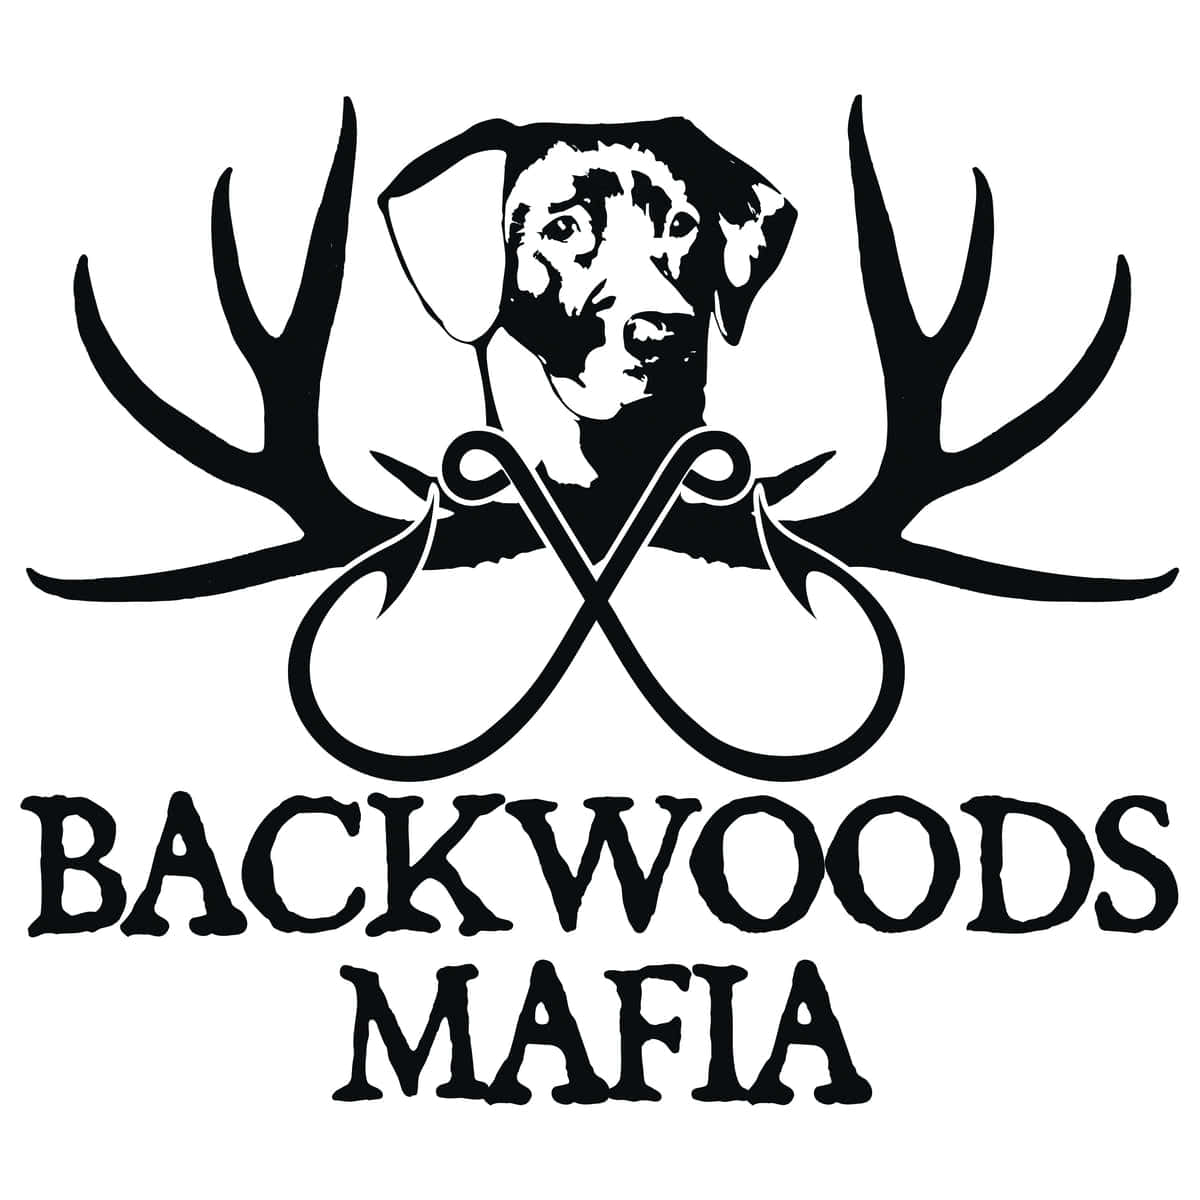 Backwoods Mafia Logo With Antlers